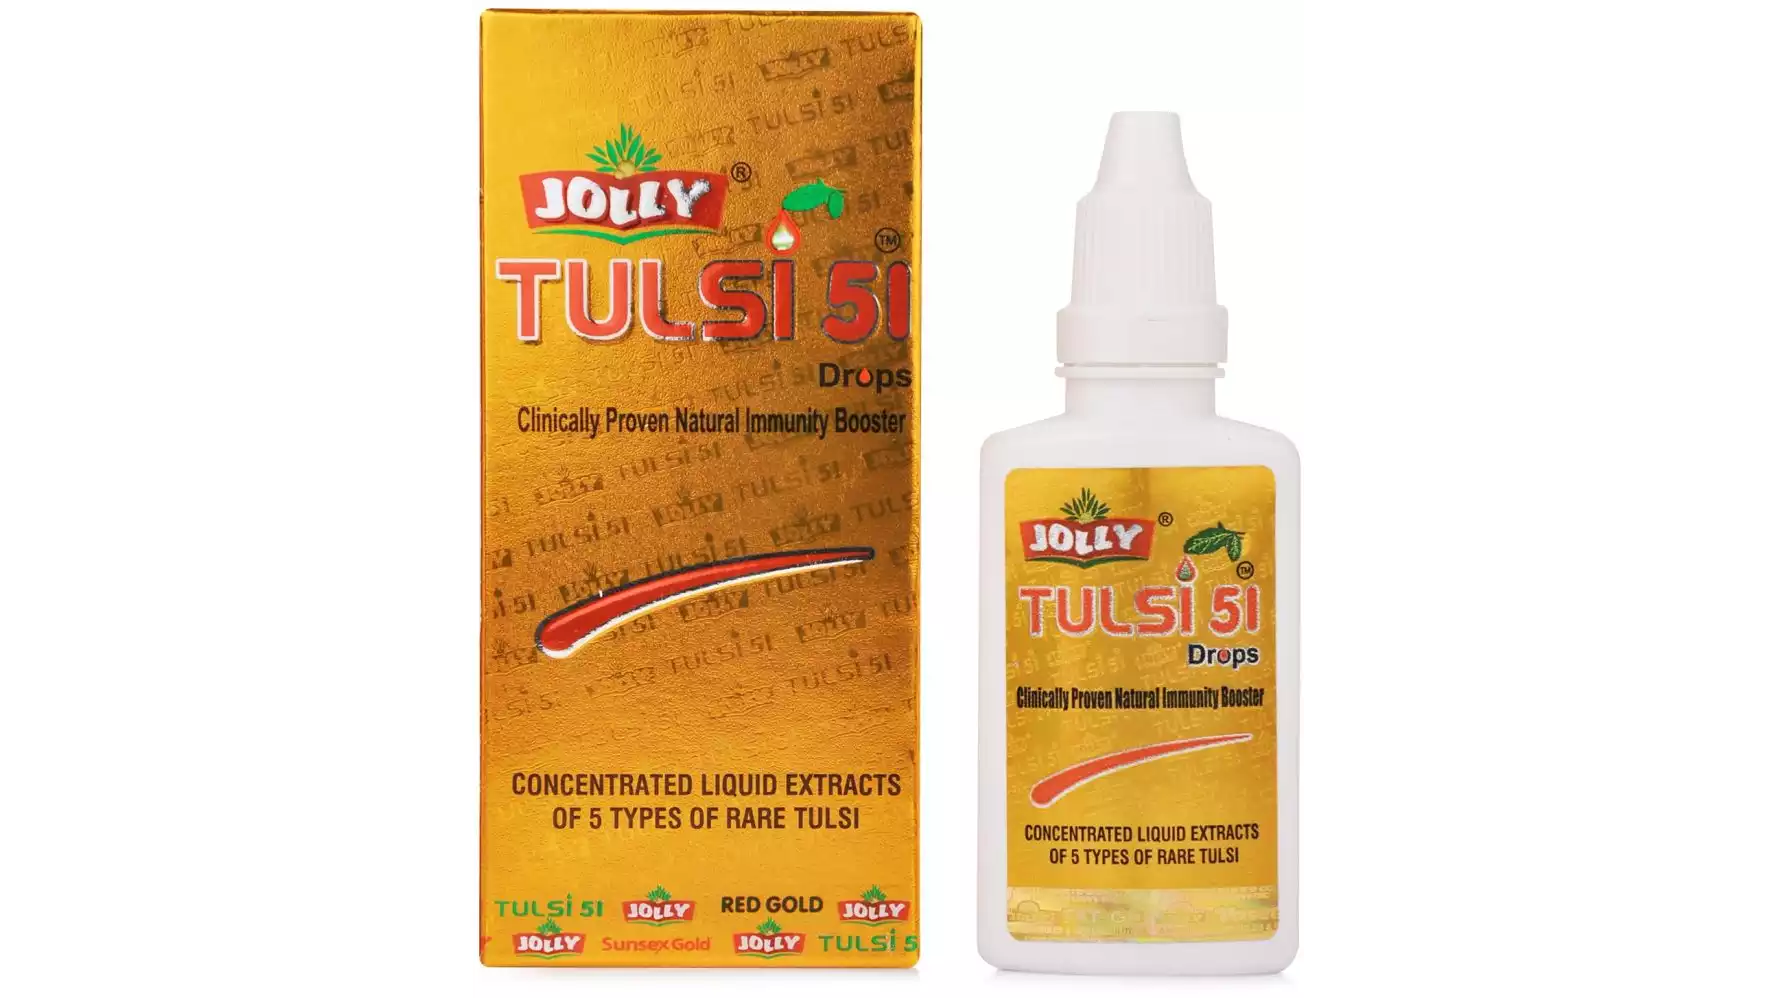 Jolly Tulsi 51 Drops (18ml)